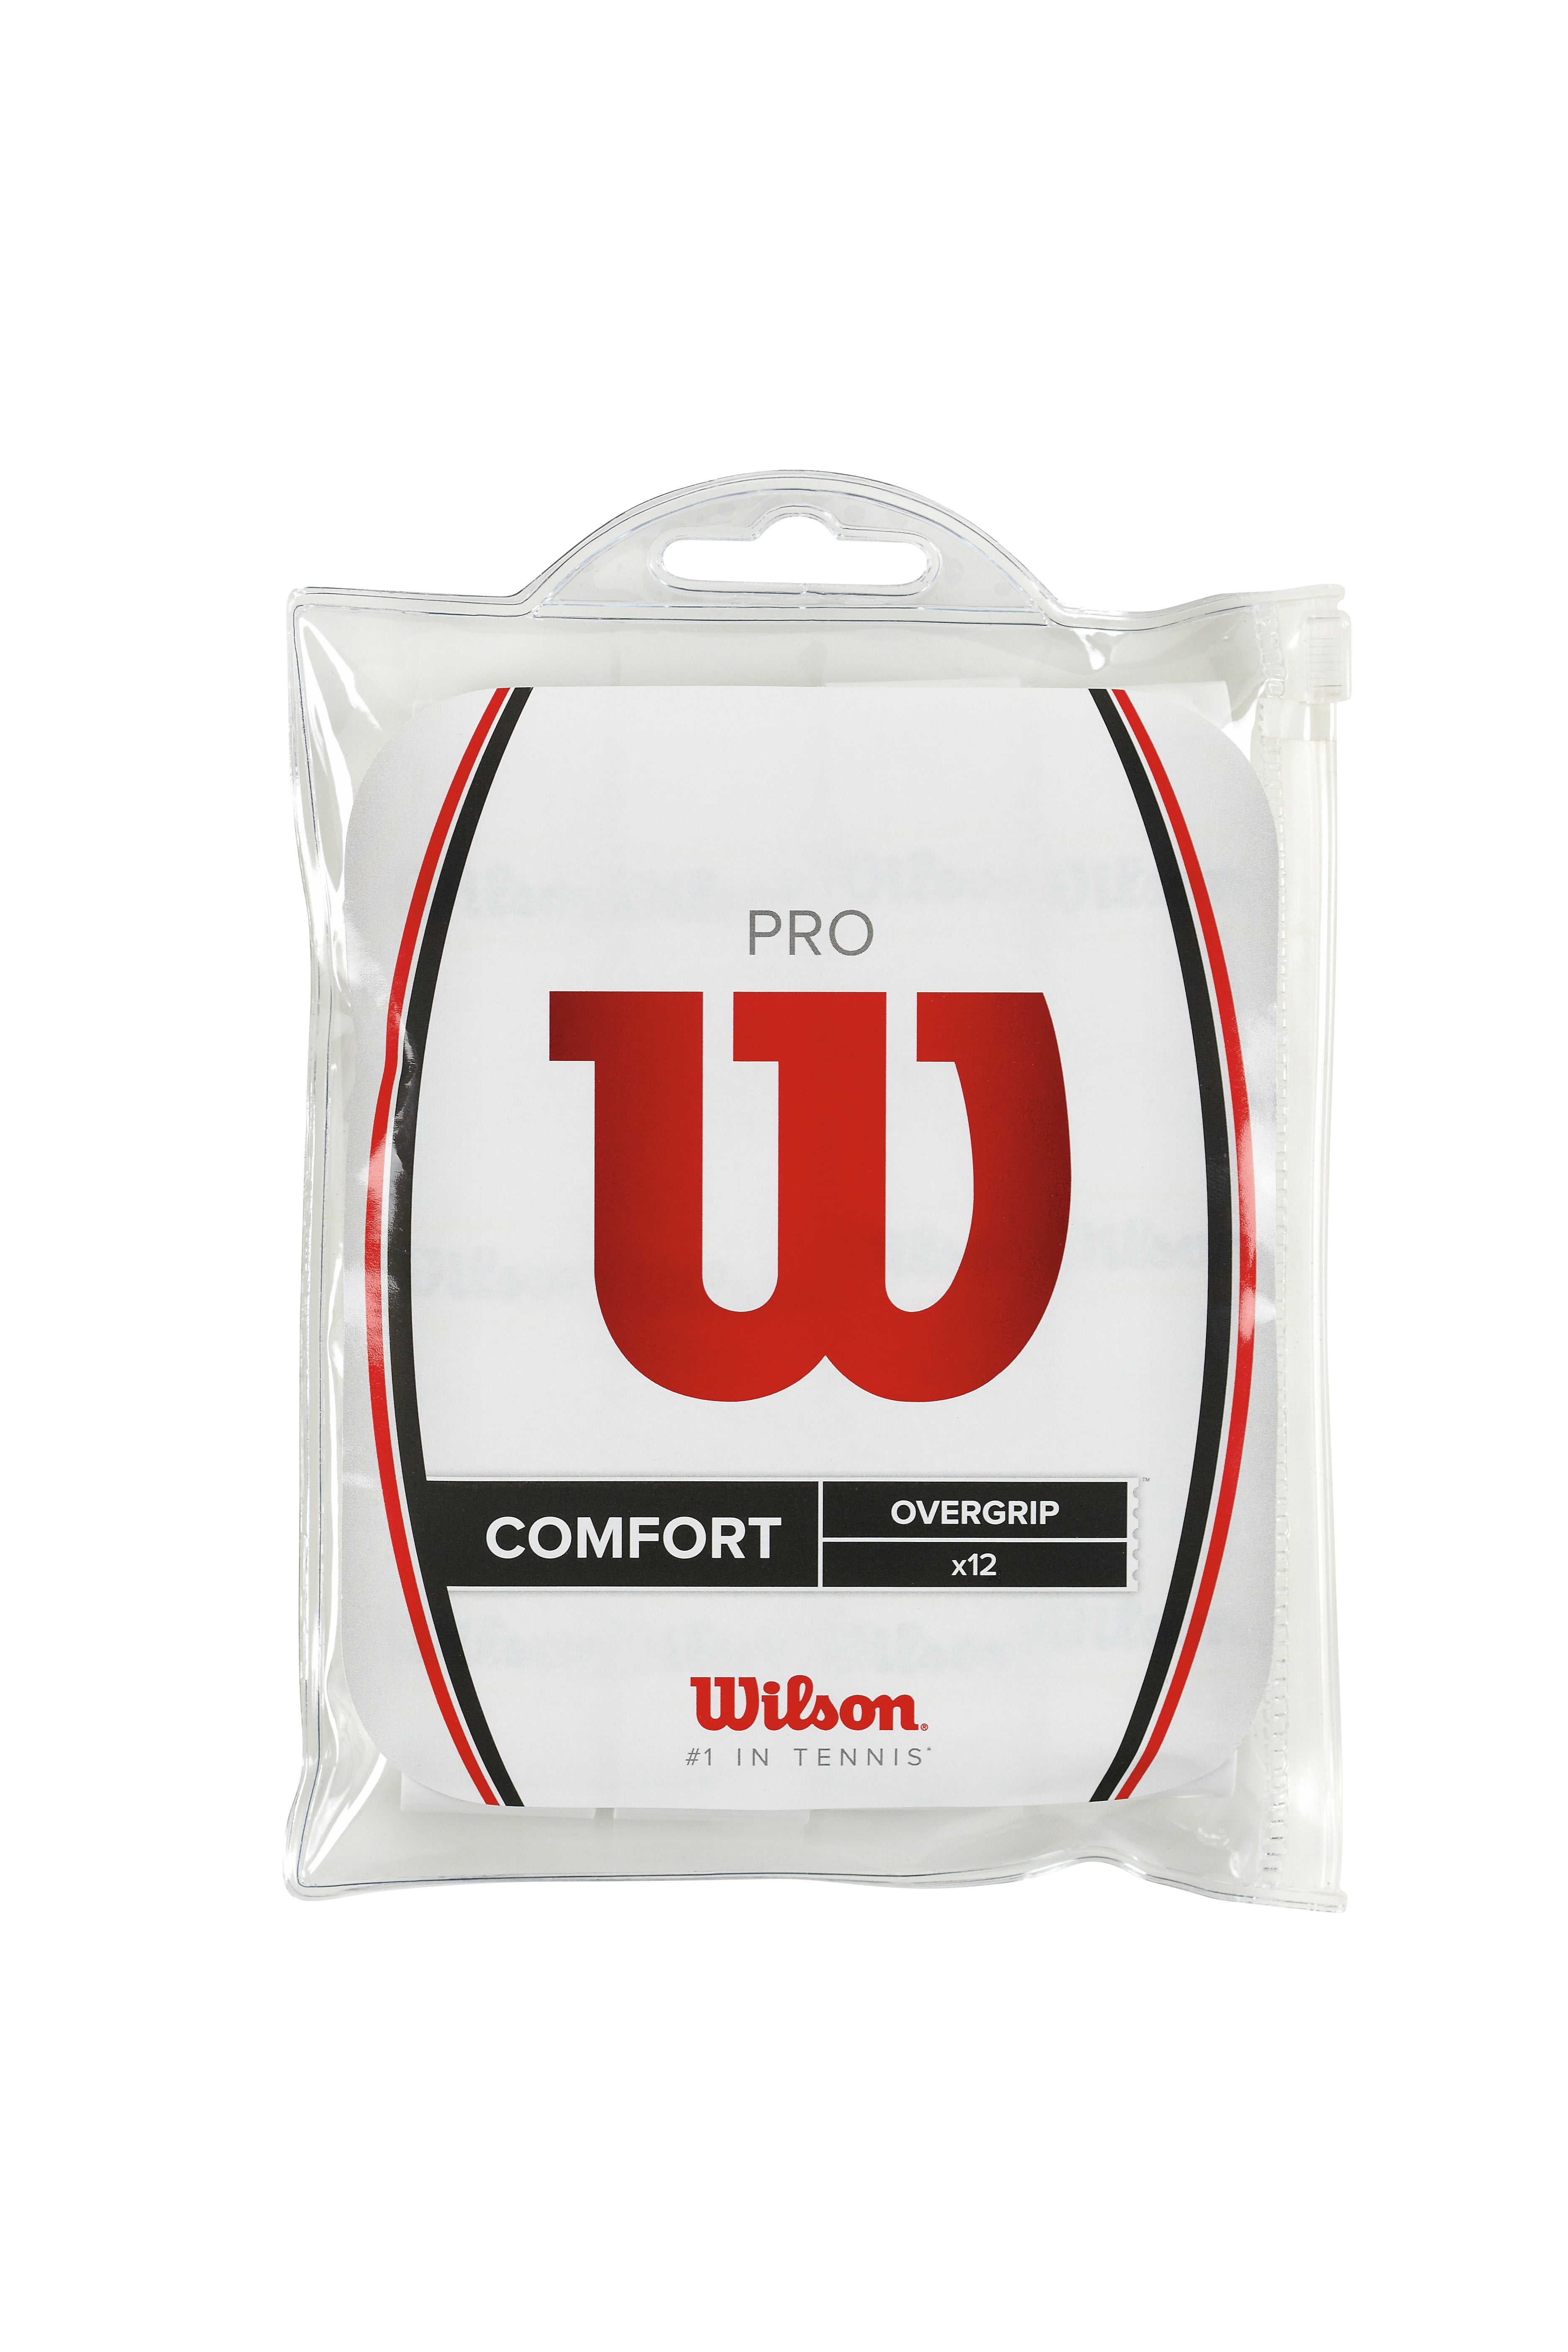 Wilson Tennis Pro Overgrip 3 Pack Gray Comfort Badminton Tape Racket WRZ4014SI 